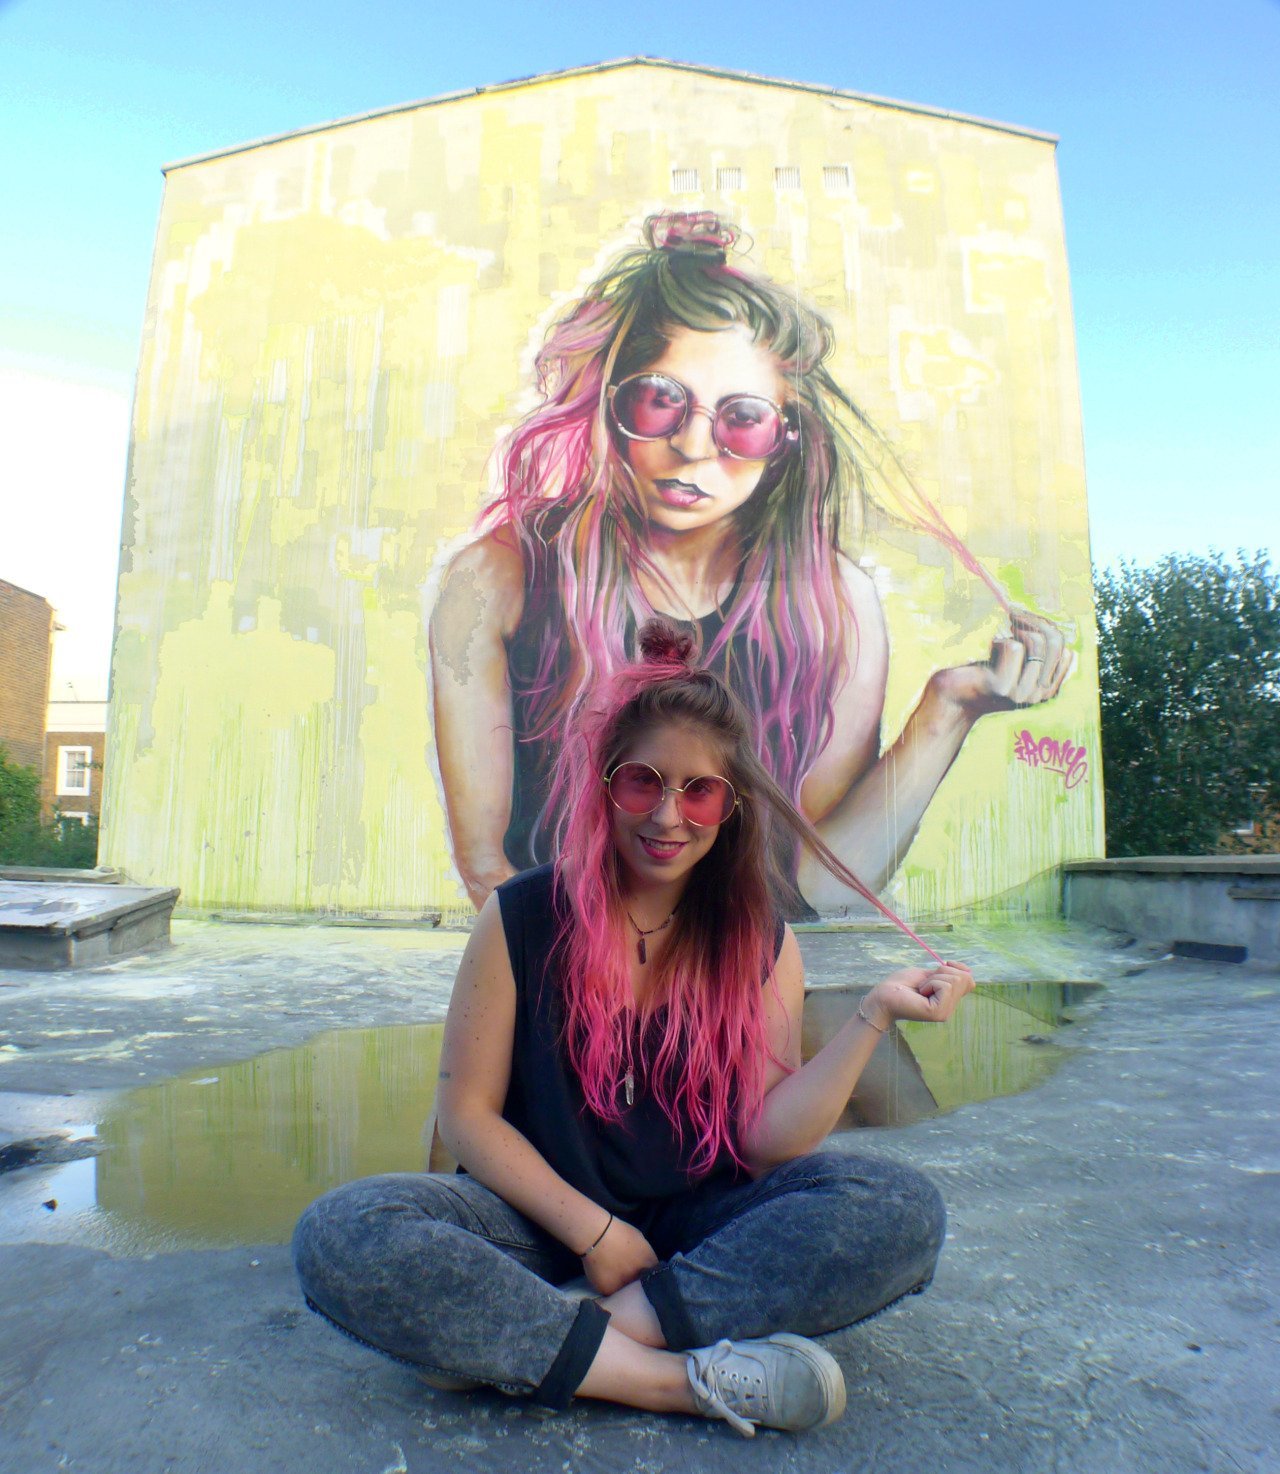 'Kisanna Vipler' #Art by Irony#Streetart #Mural #Graffiti https://t.co/cLEQkiBzTW